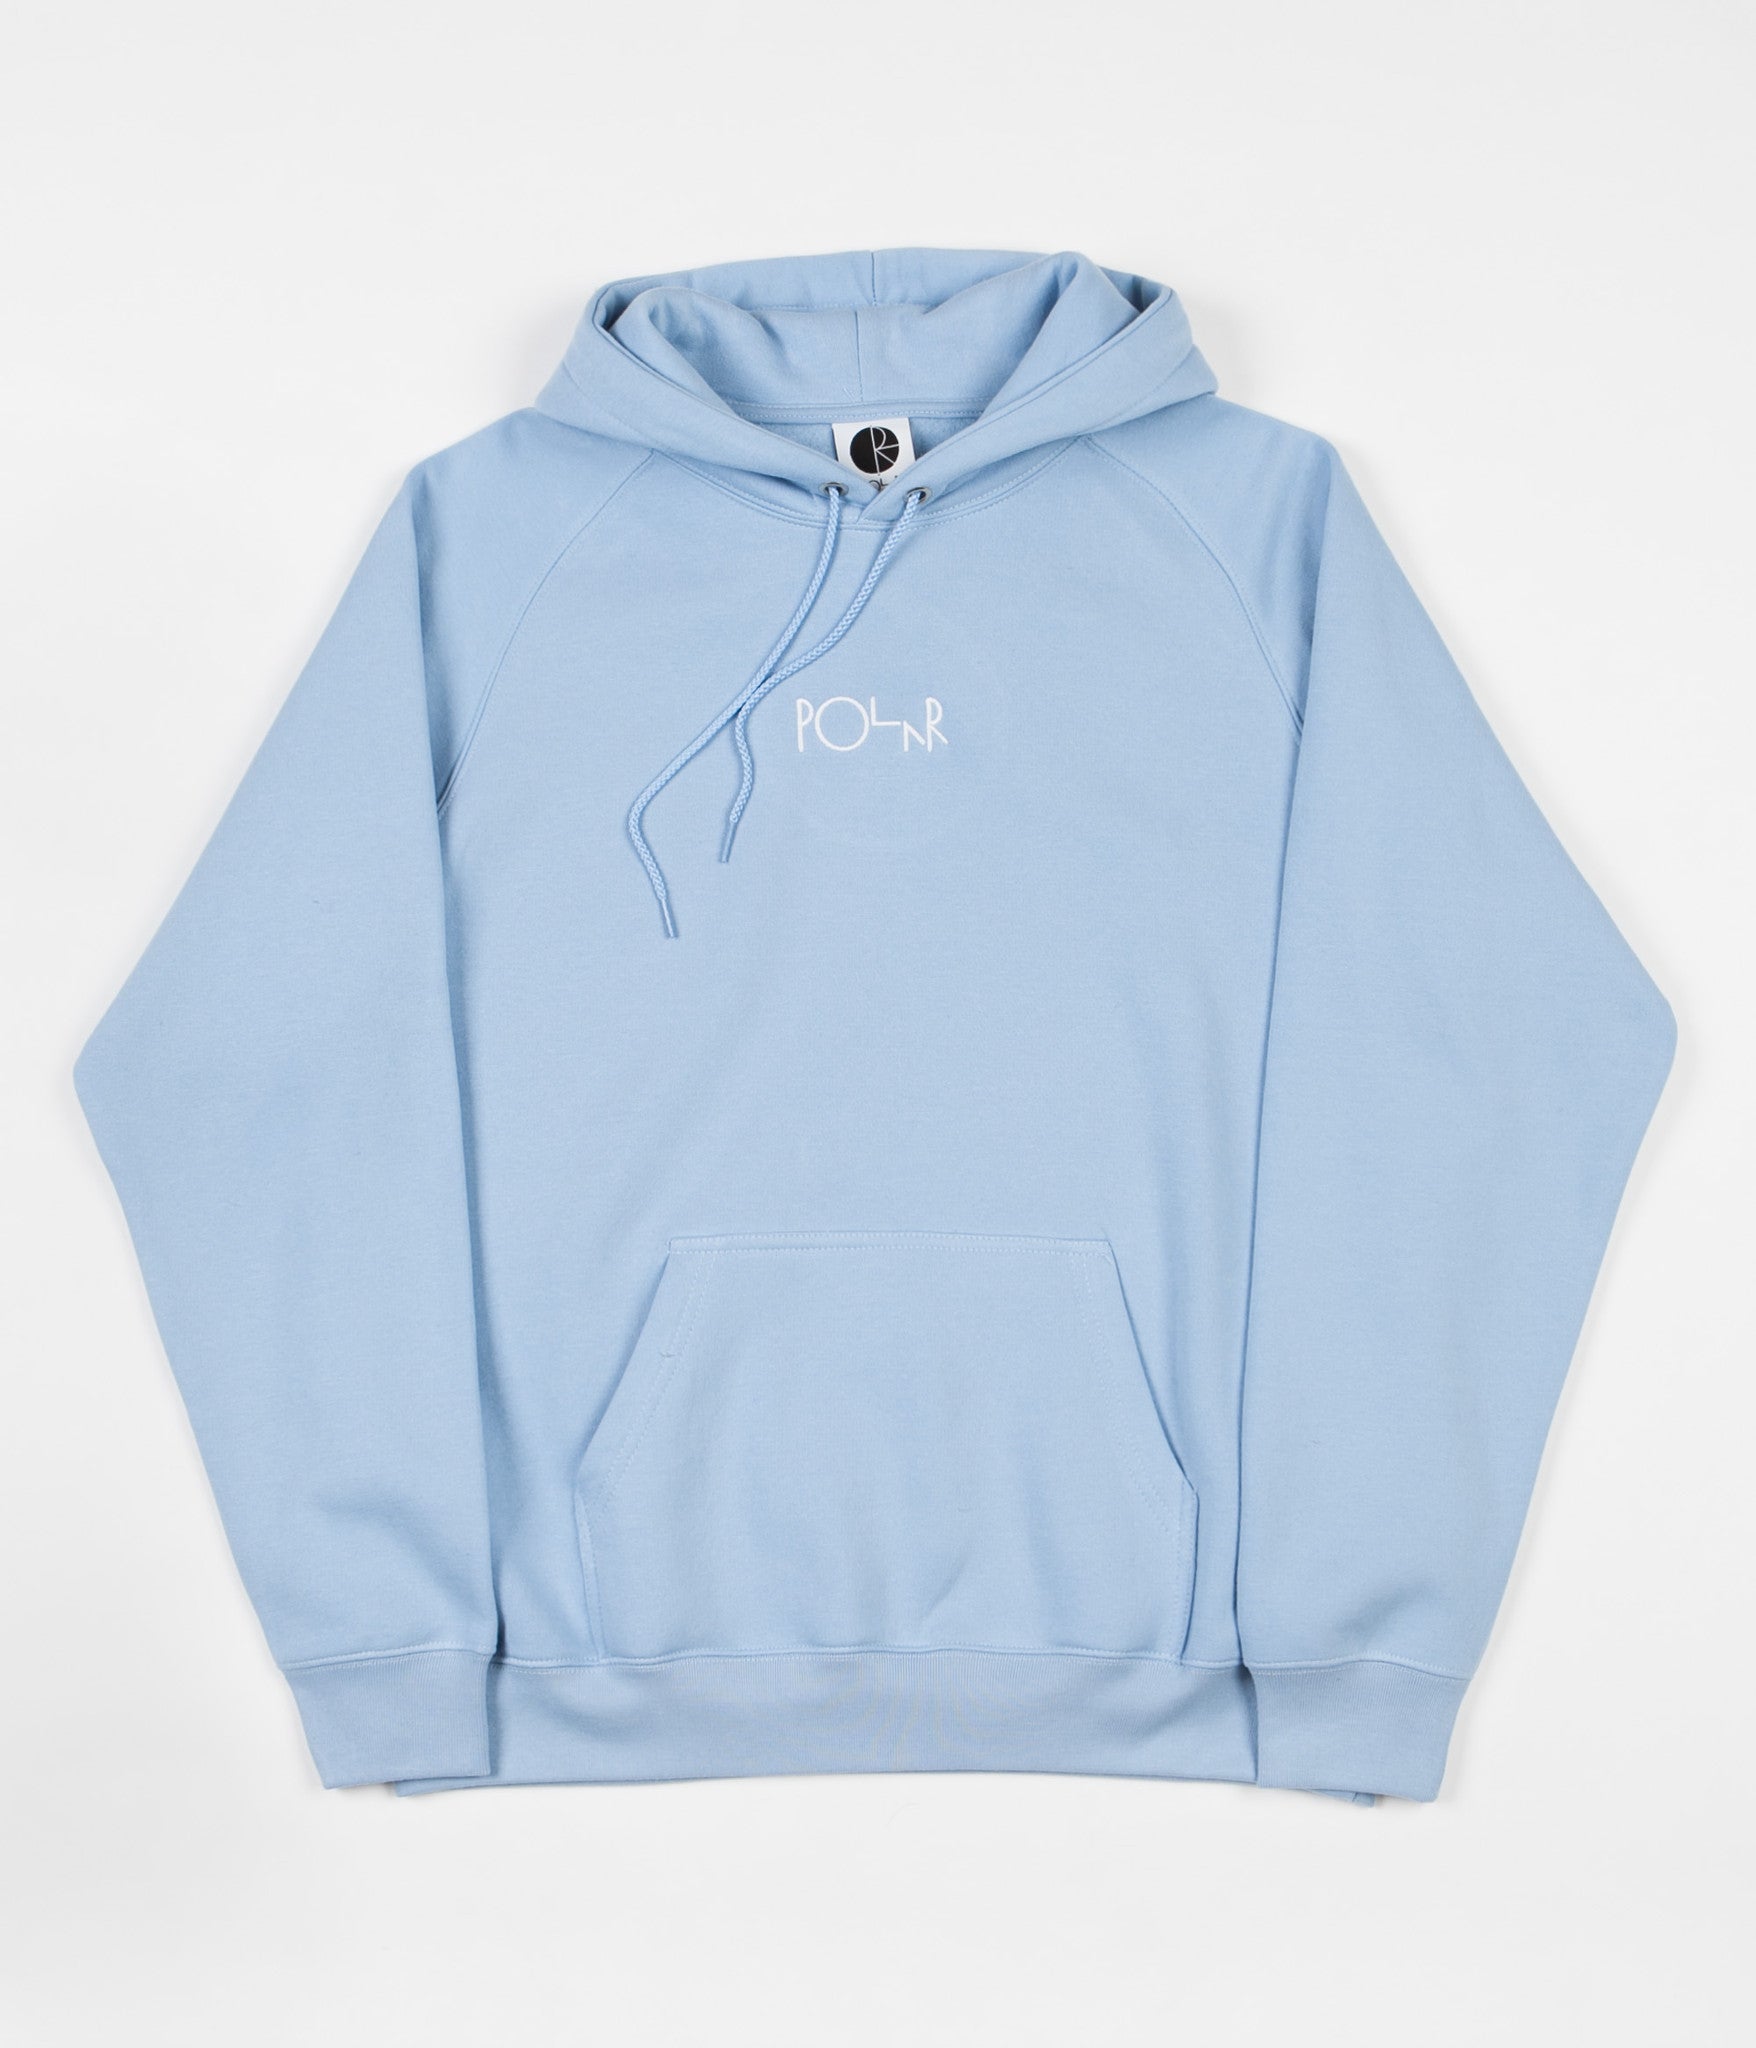 Polar Default Hooded Sweatshirt - Powder Blue | Flatspot